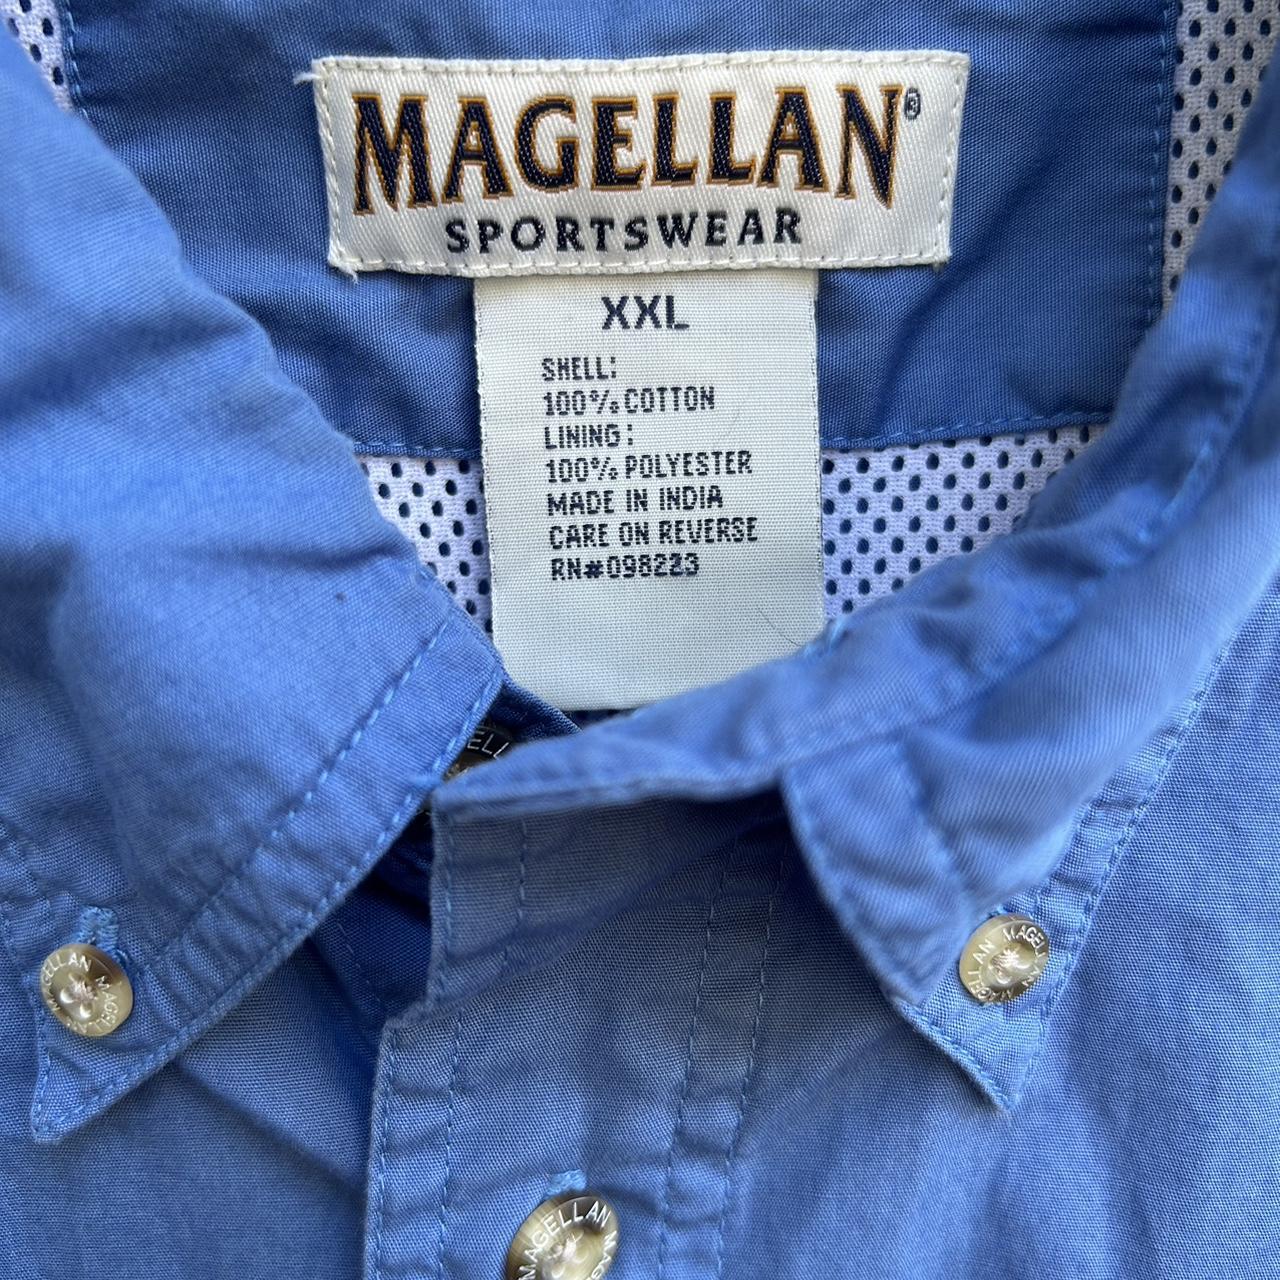 Magellan sportswear shirt